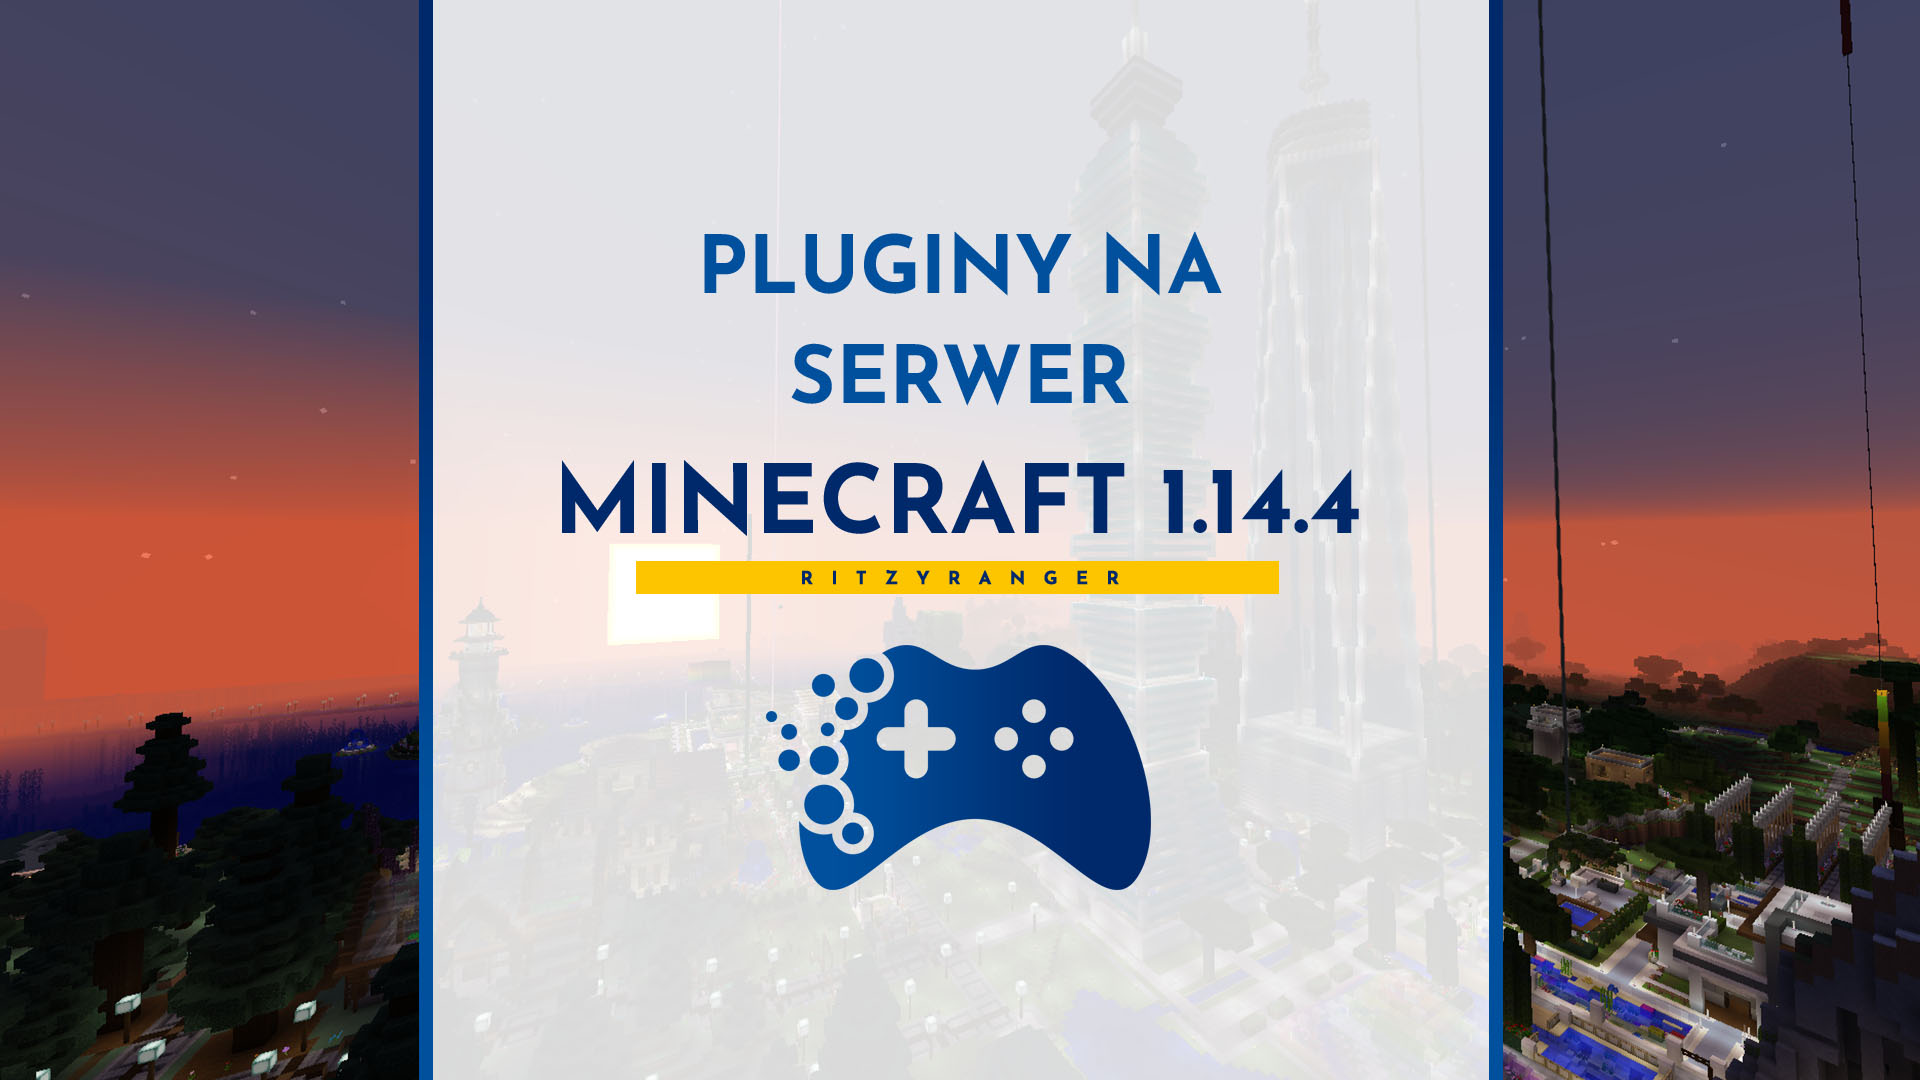 Pluginy na serwer Minecraft 1.14.4